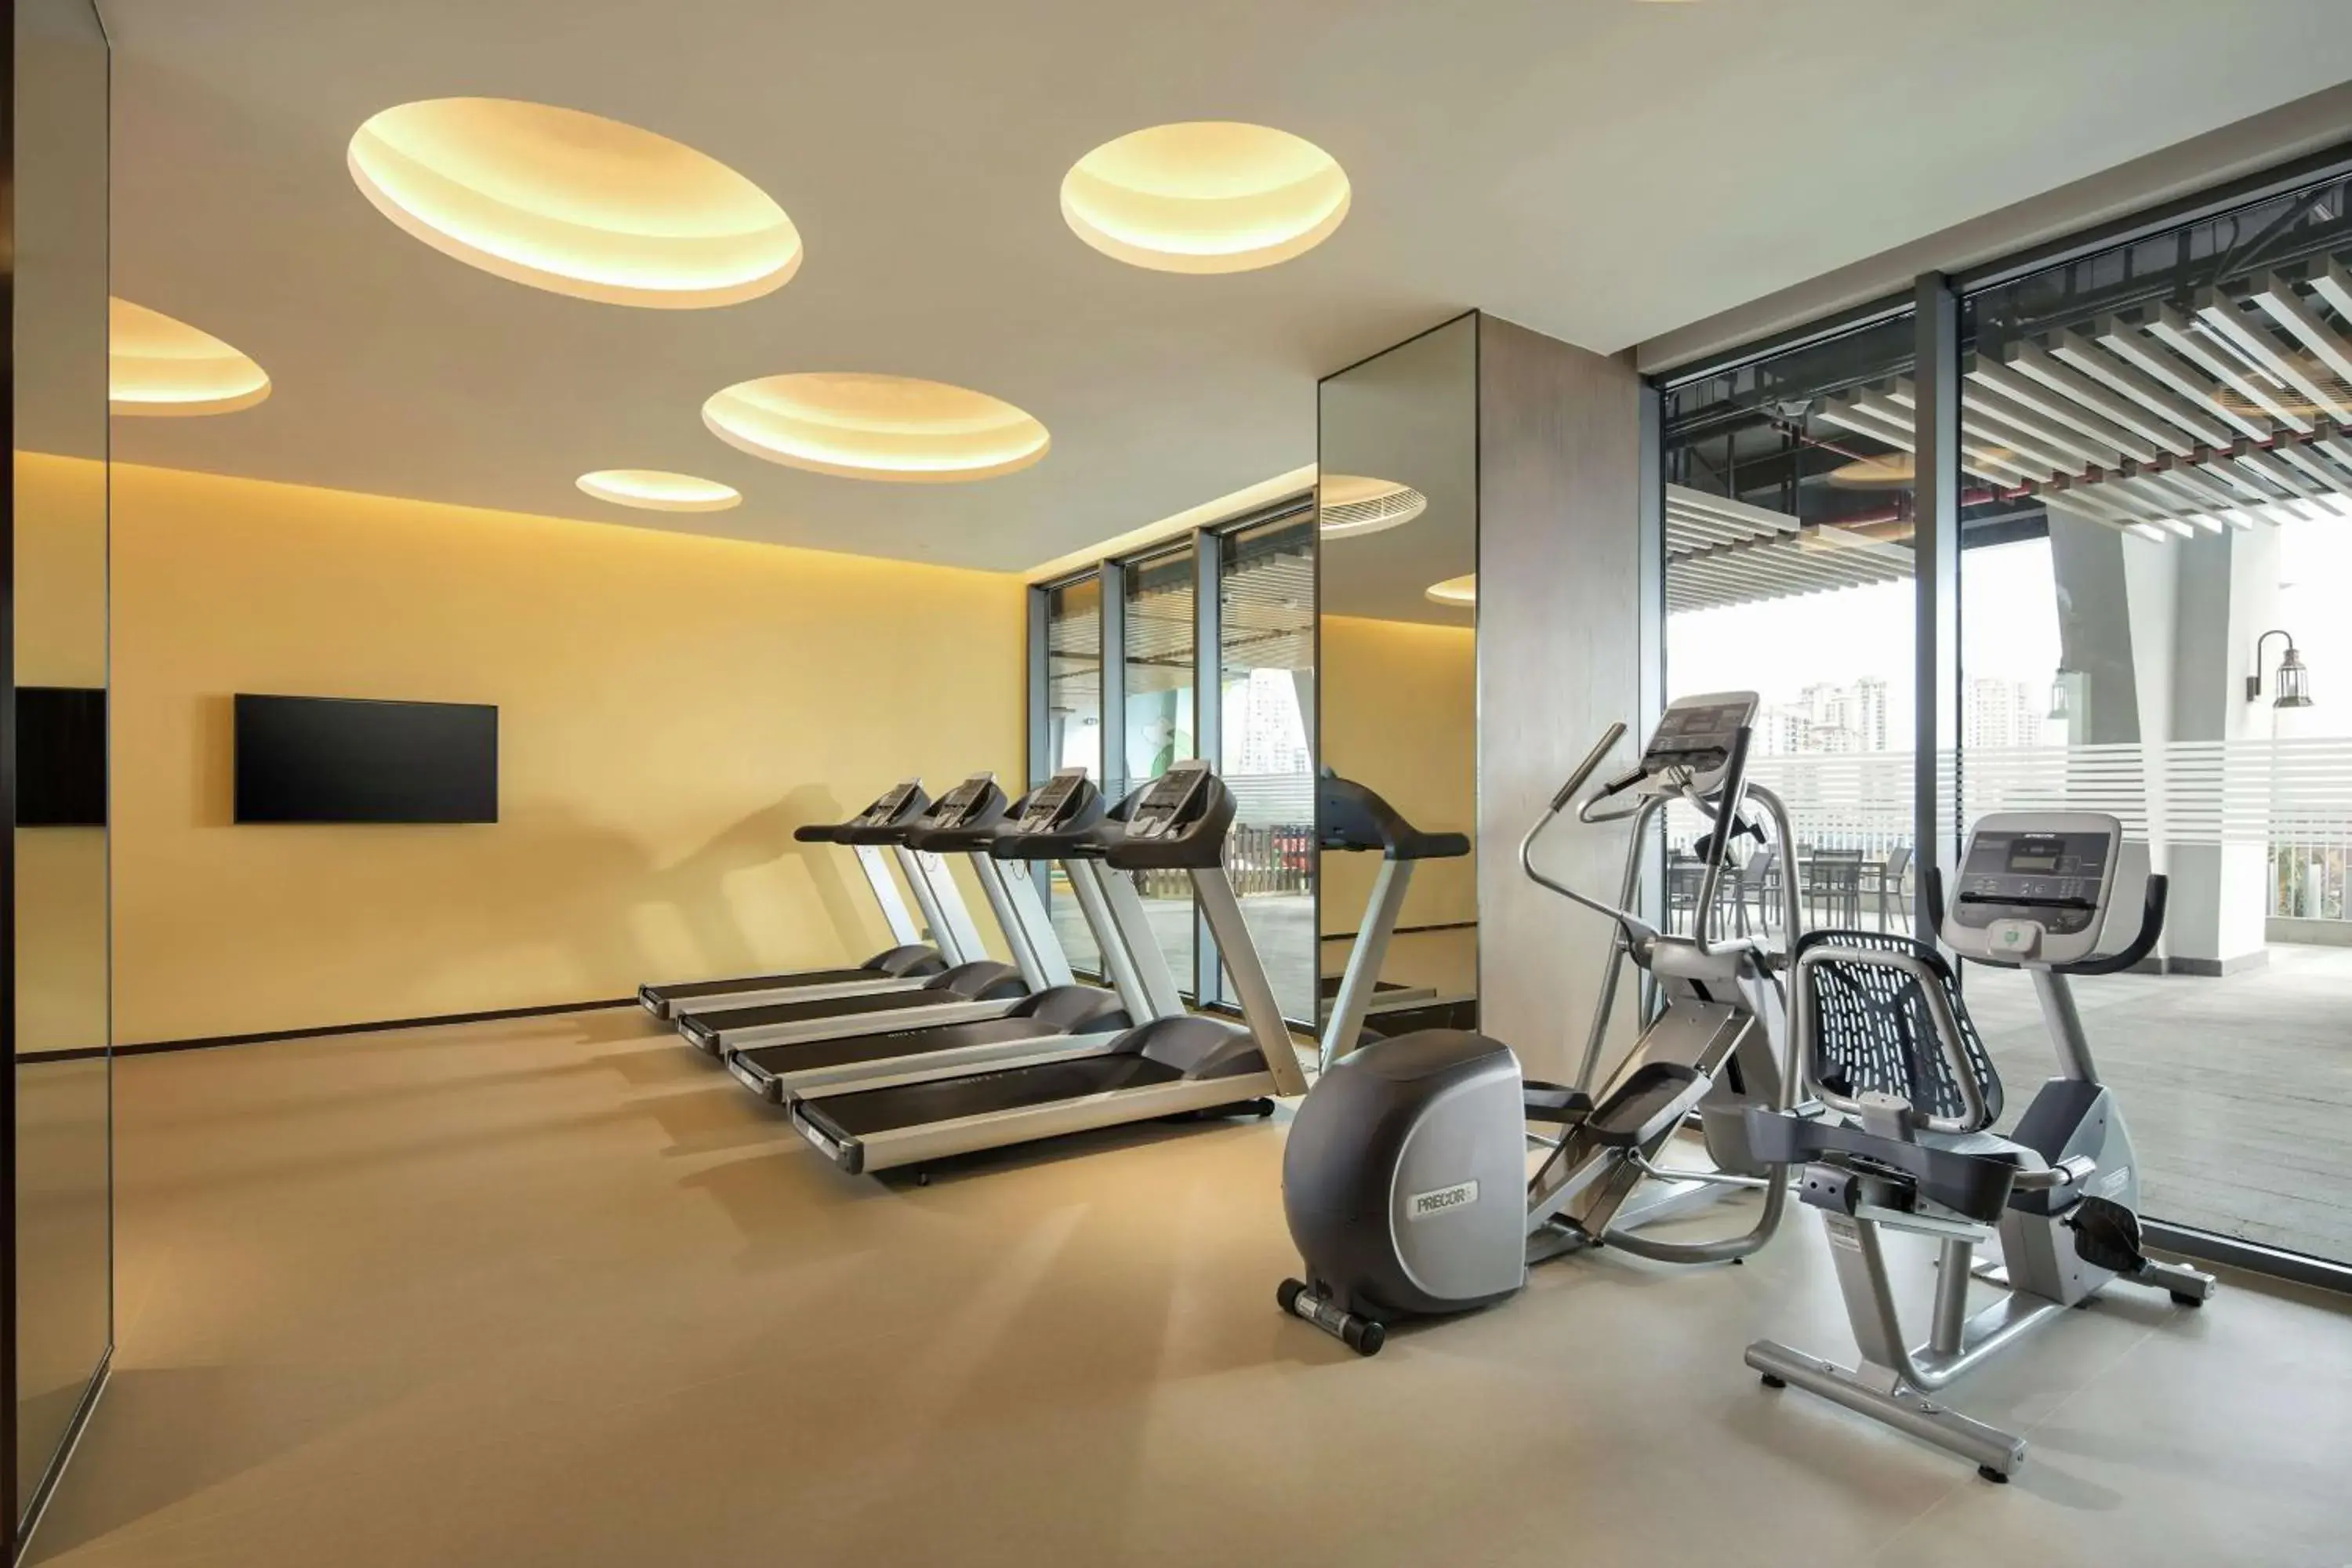 Fitness centre/facilities, Fitness Center/Facilities in Hilton Garden Inn Sanya, China